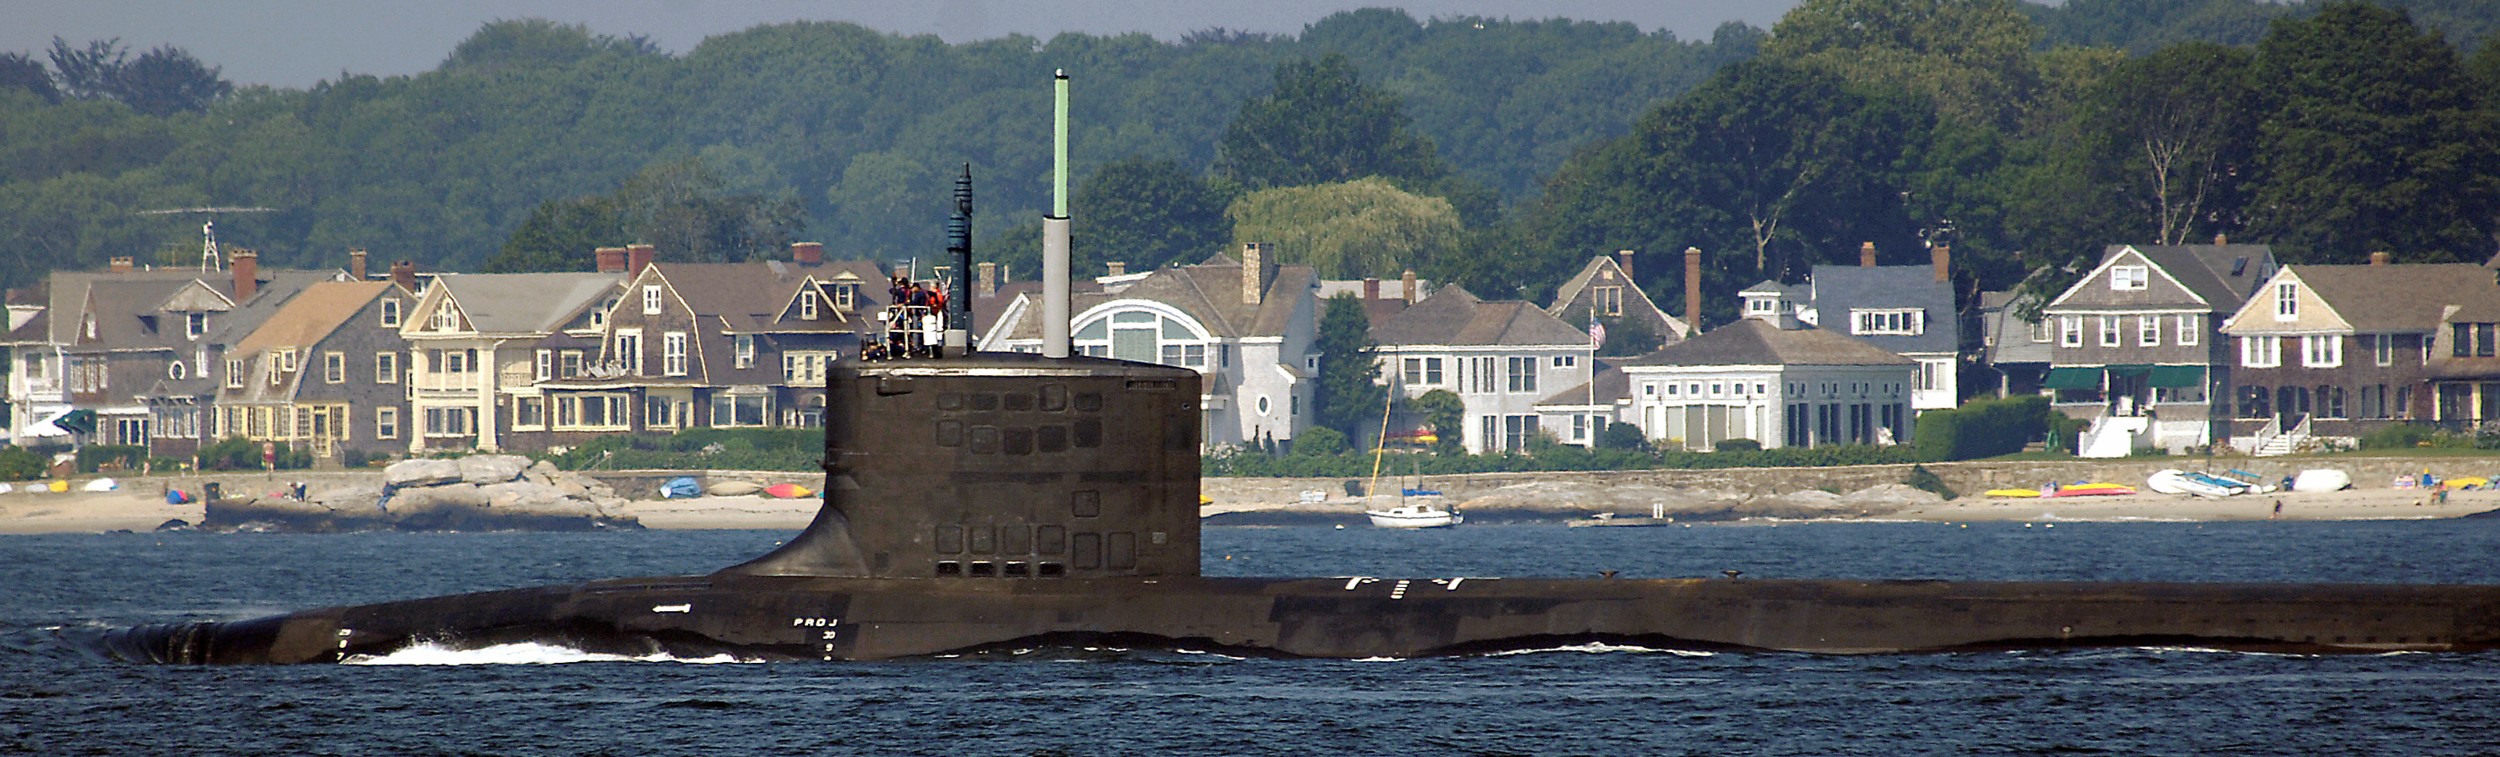 ssn-778 uss new hampshire virginia class attack submarine us navy 2008 24 groton connecticut